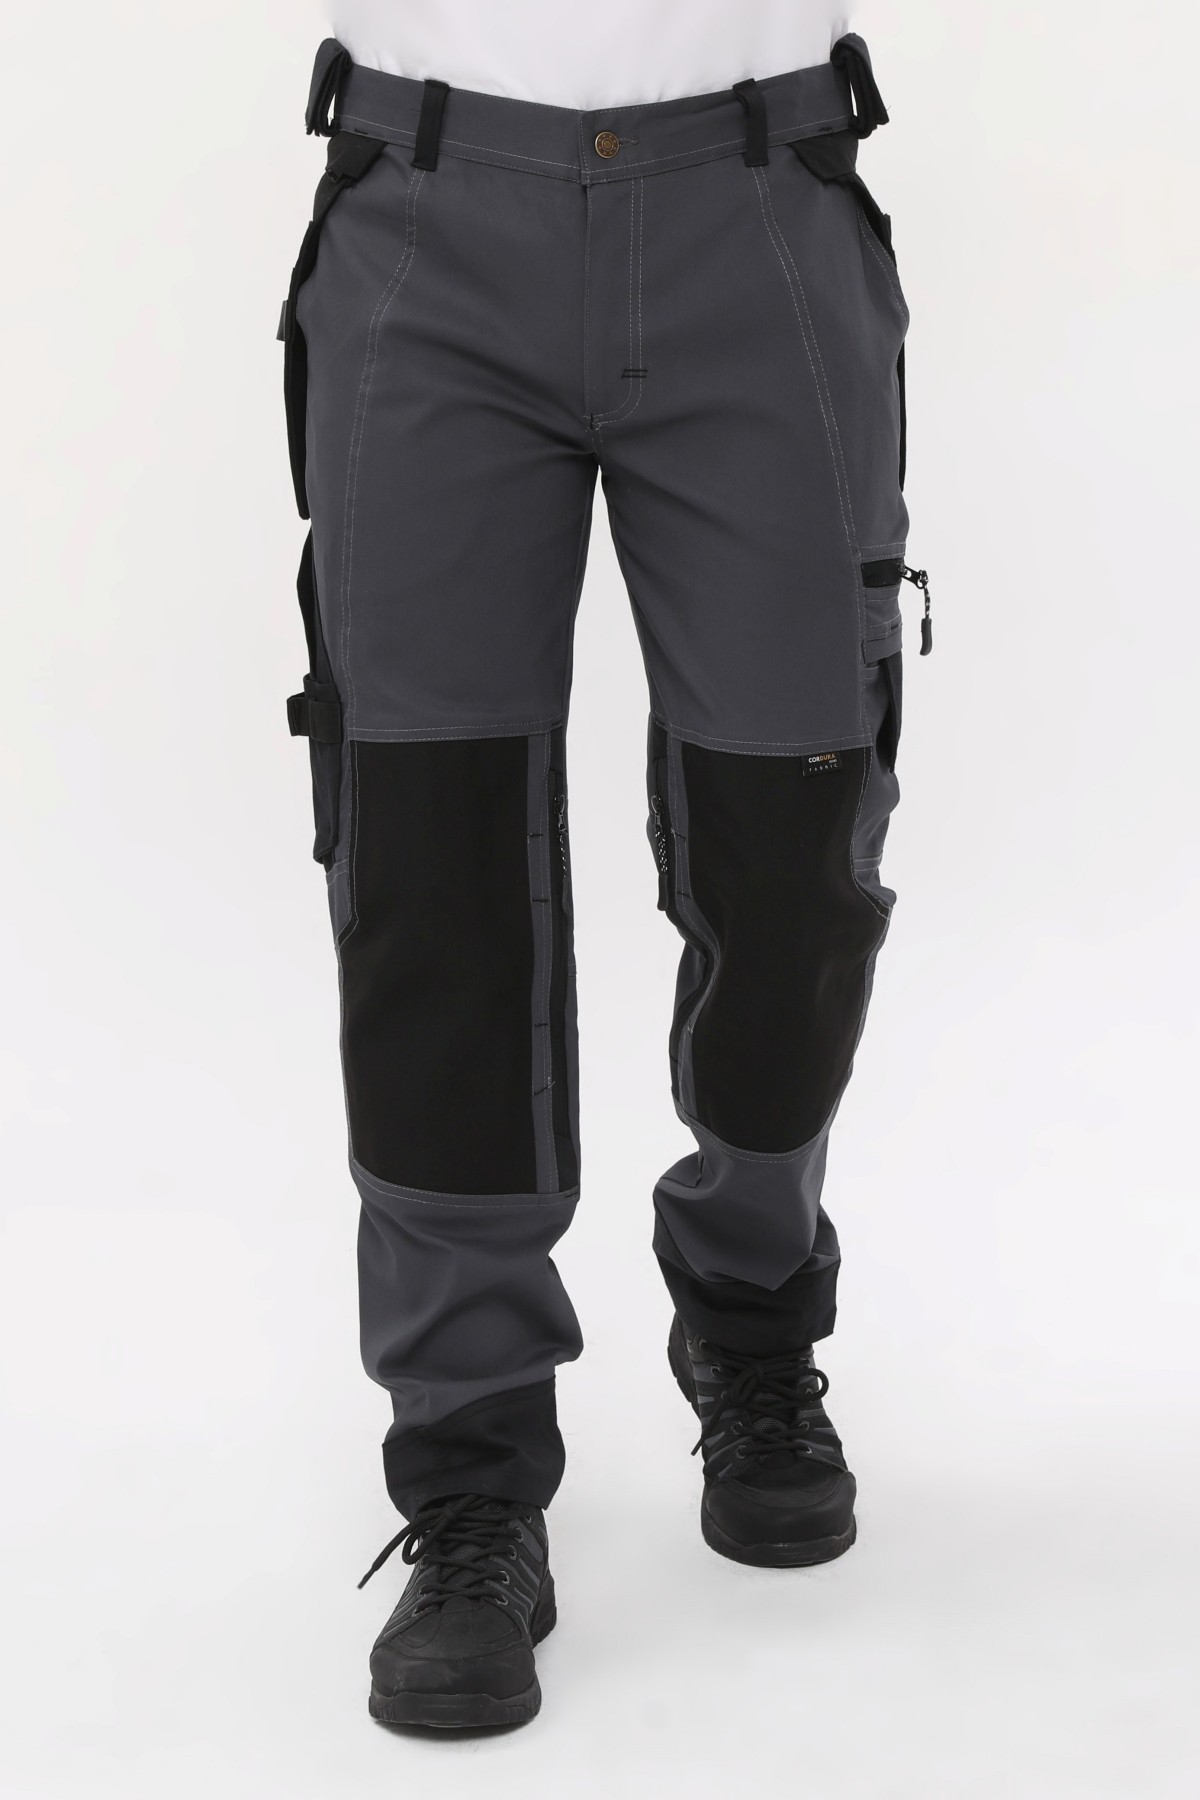 Uniprom İş Pantolonu Likralı Manchester Model Füme-Siyah